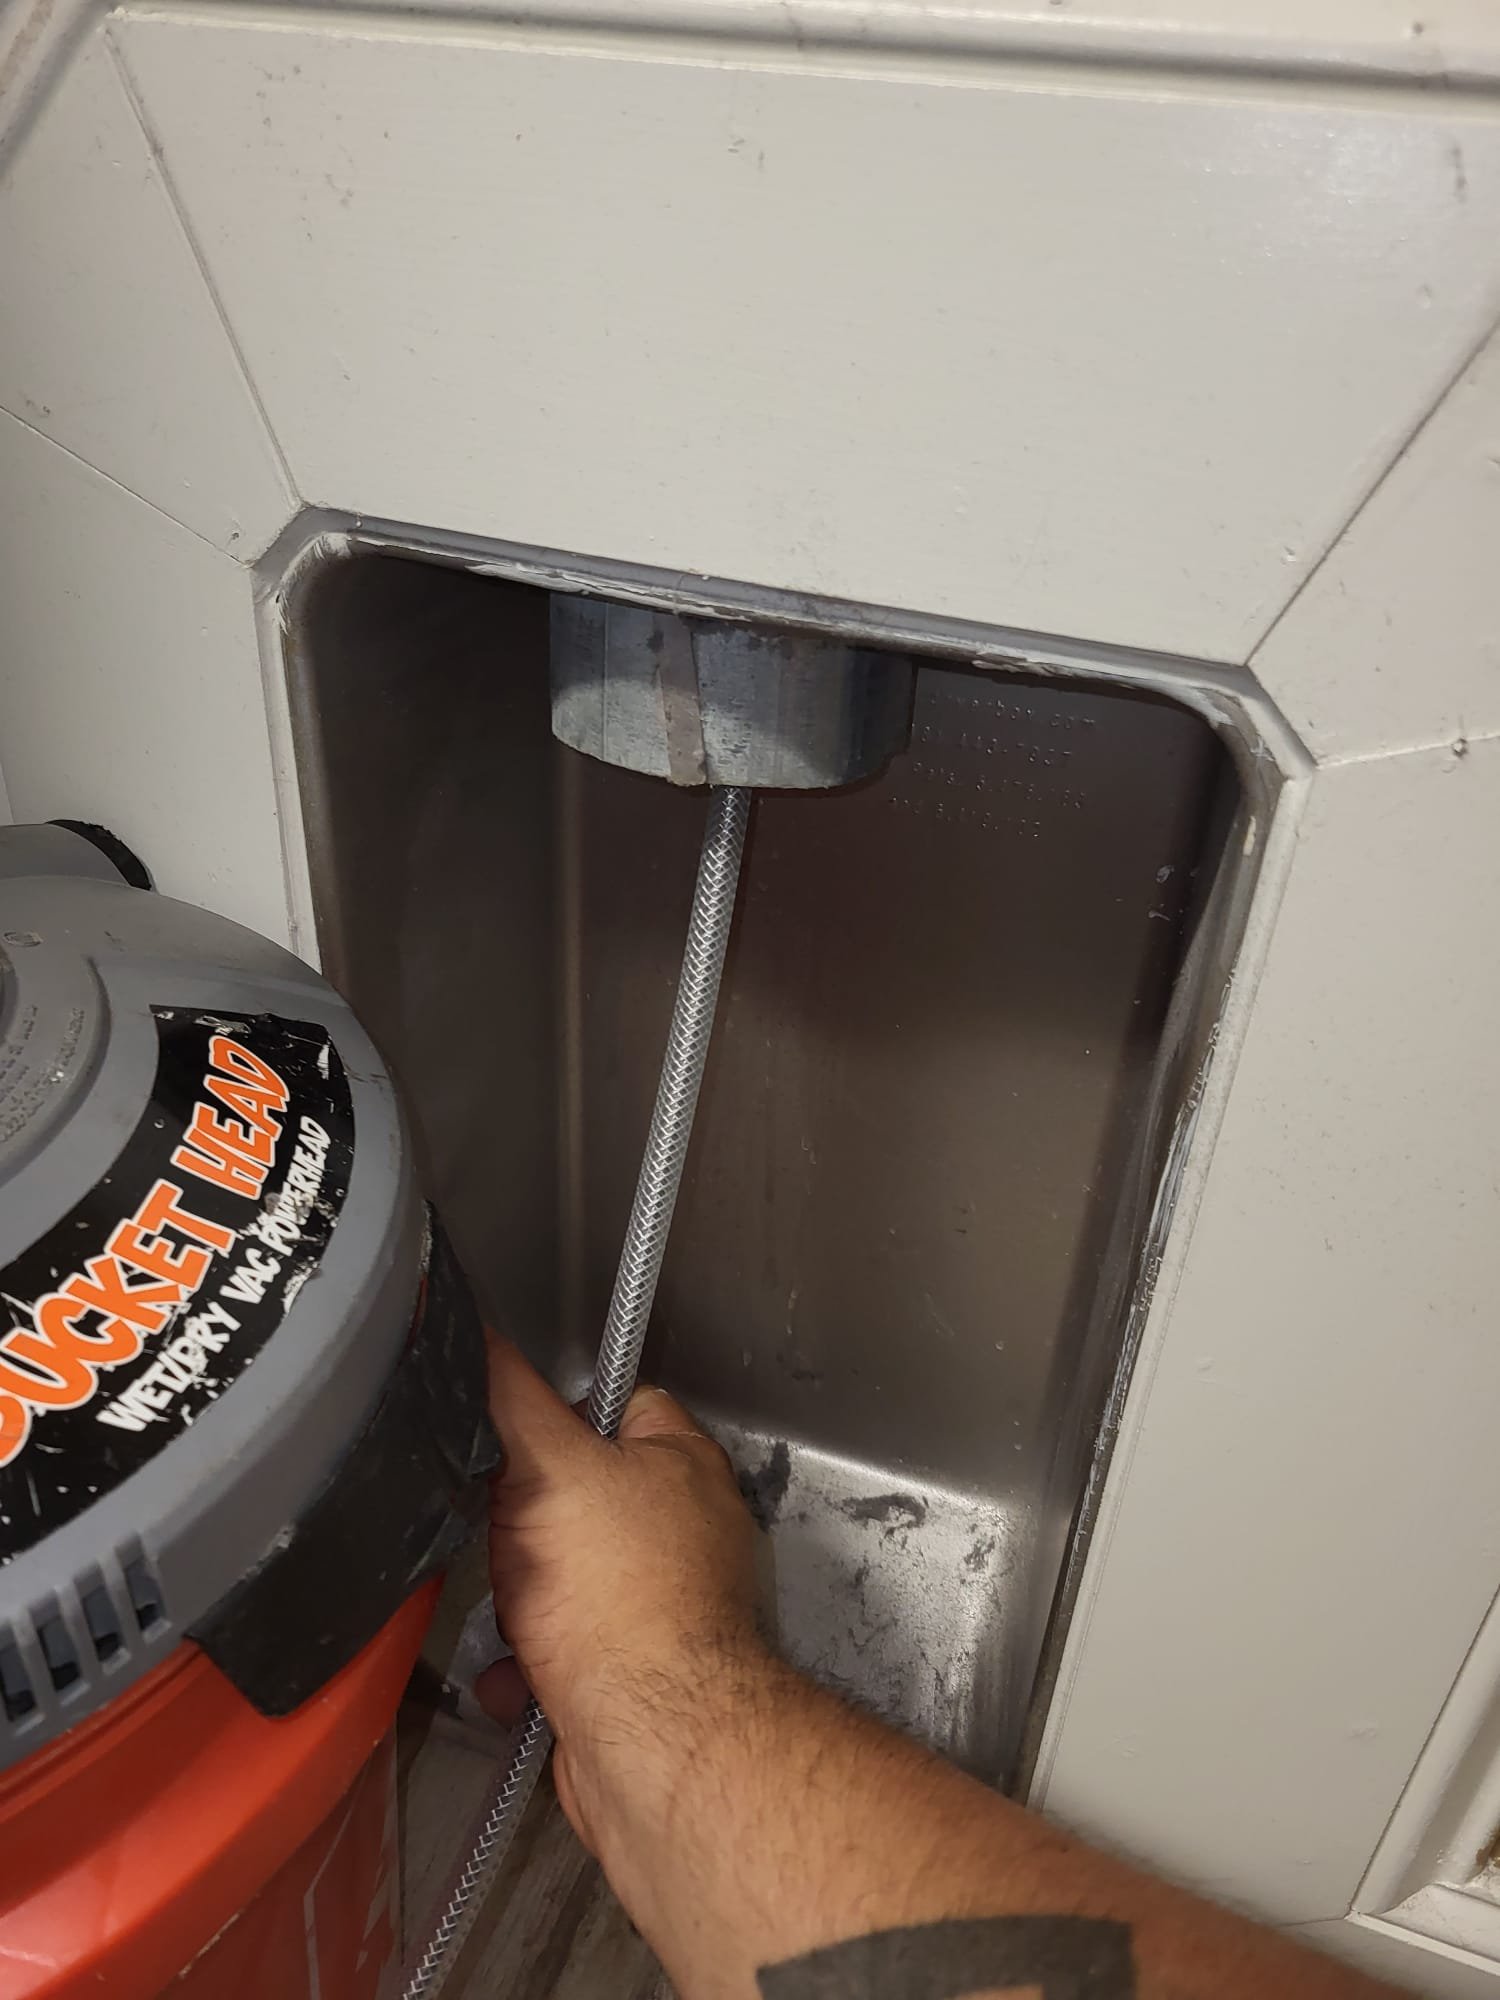 Dryer Vent Cleaning Services San Antonio